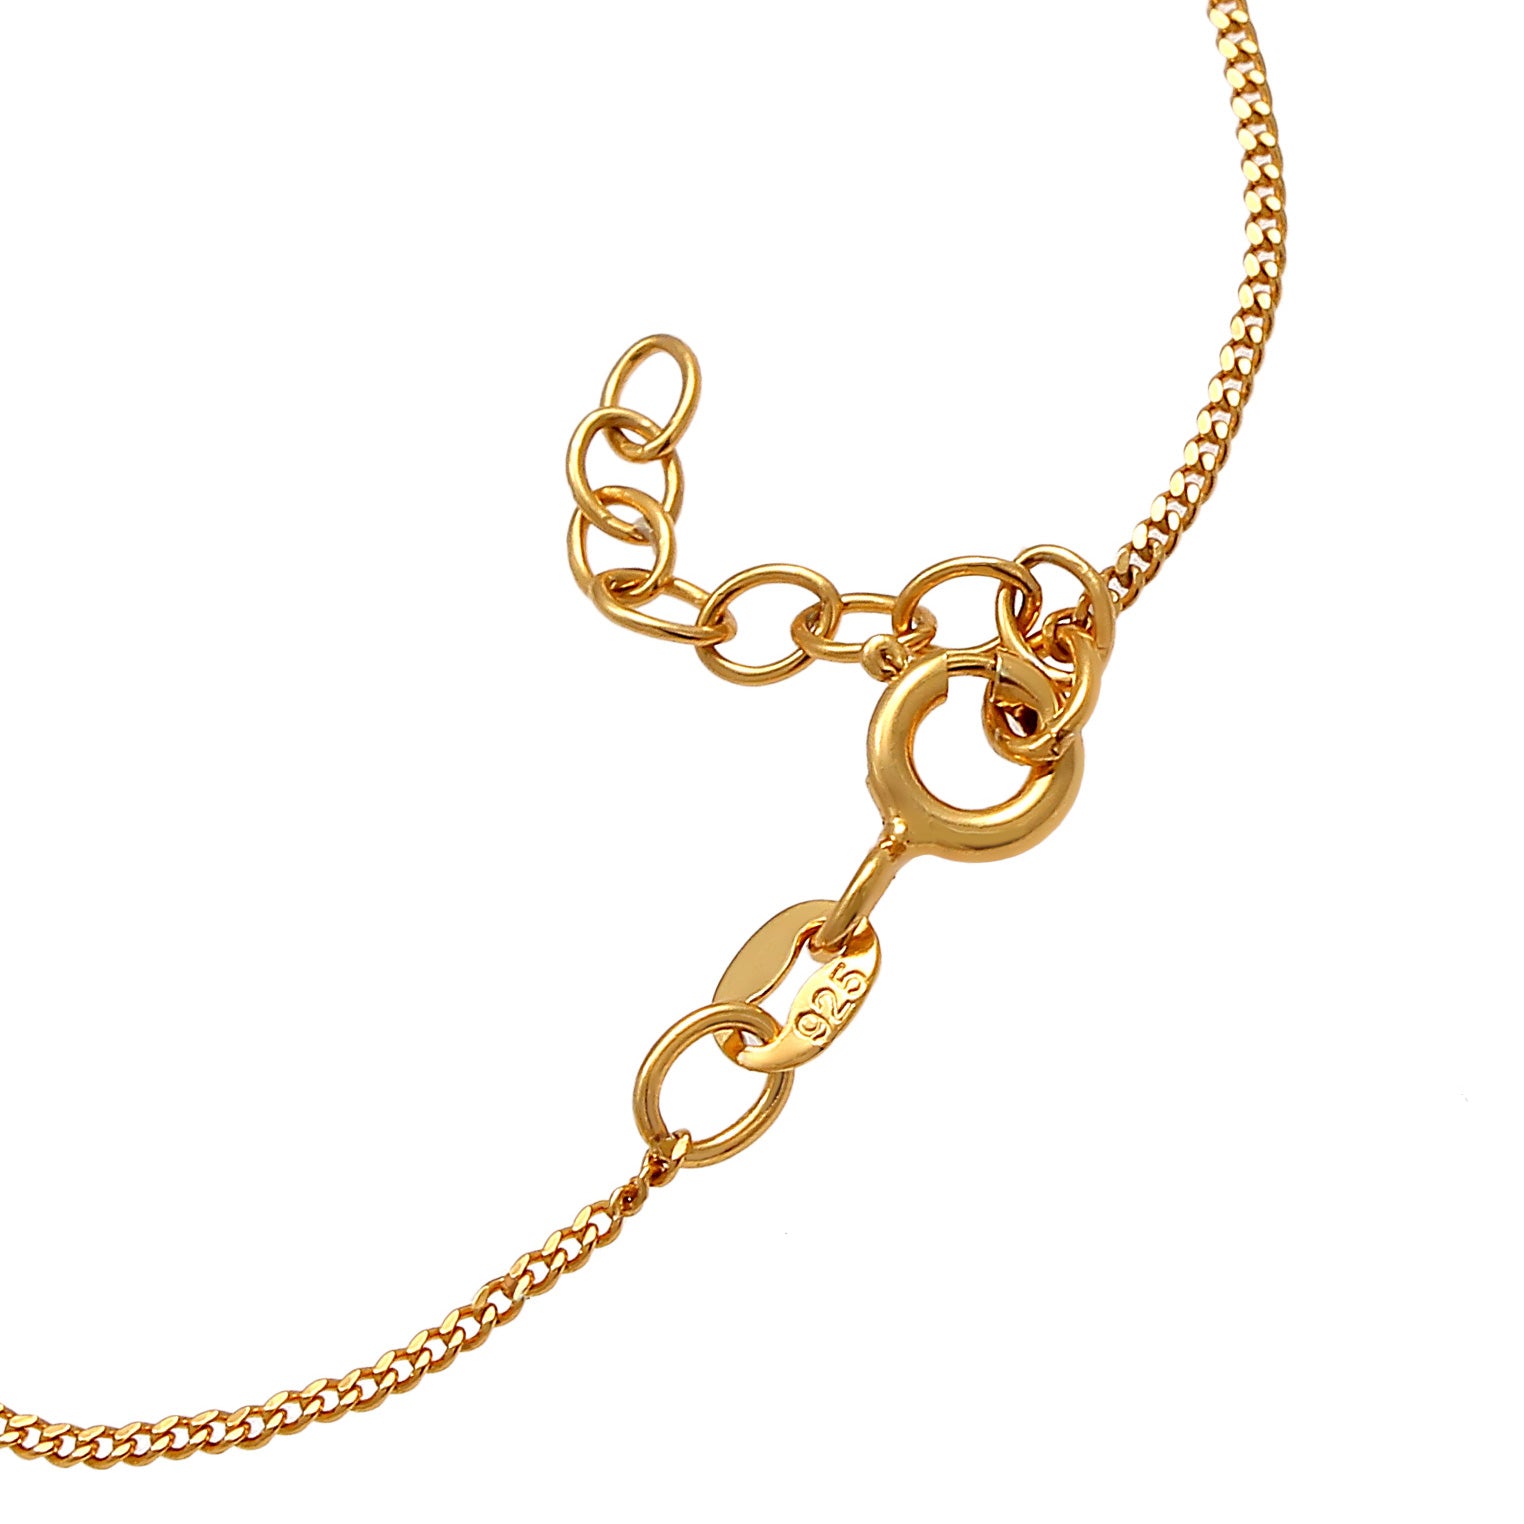 Gold - Elli | Armband Blume | Kristall ( Hellblau ) | 925 Sterling Silber vergoldet